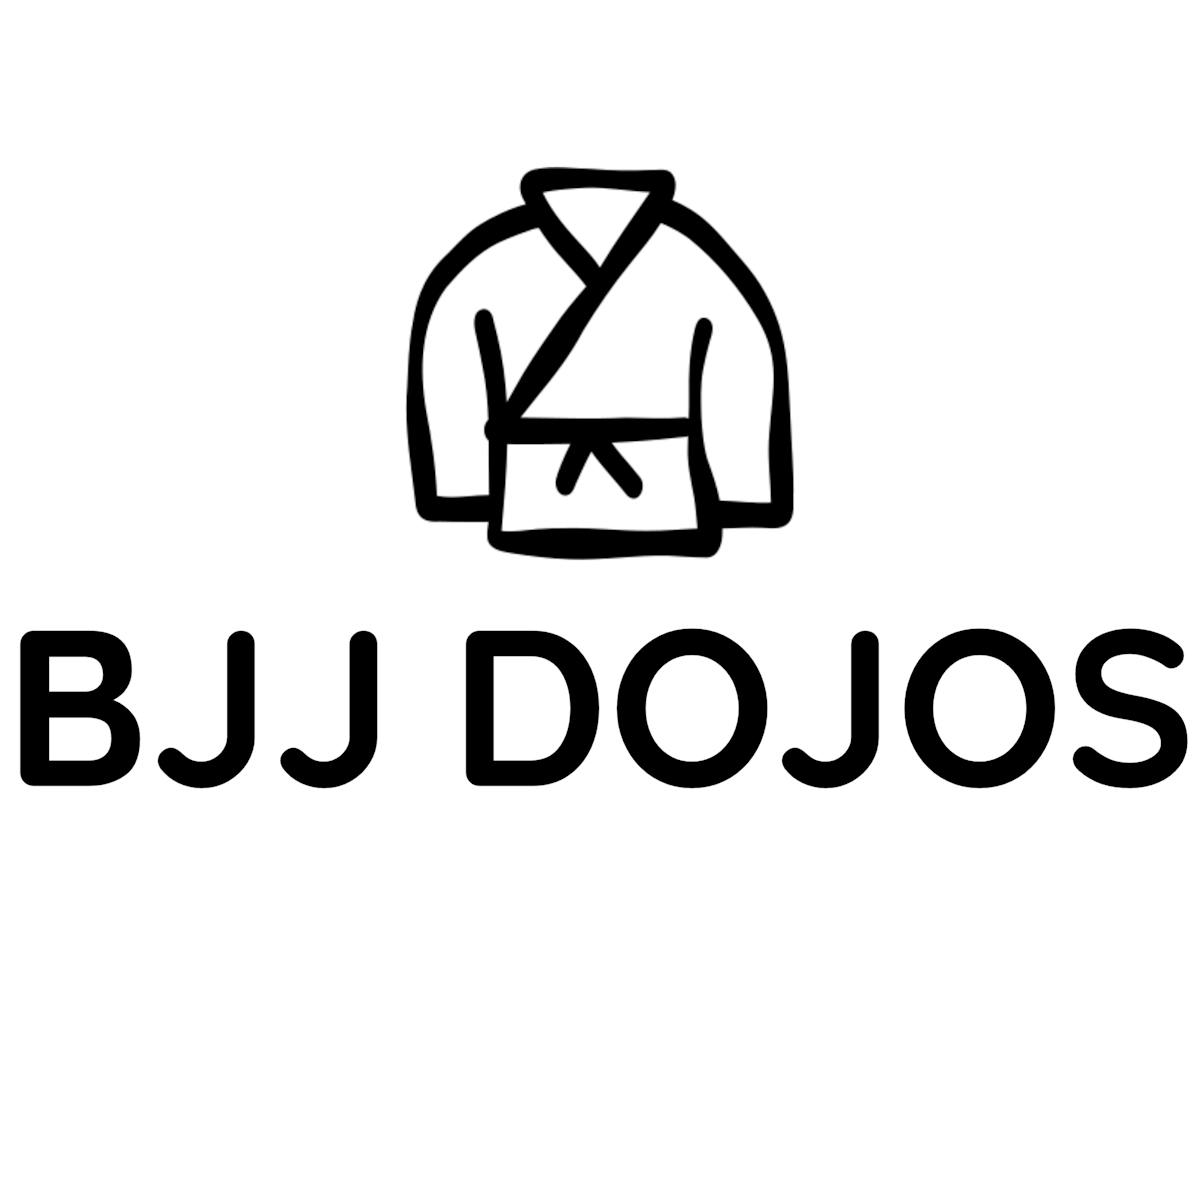 BJJ Dojos project image